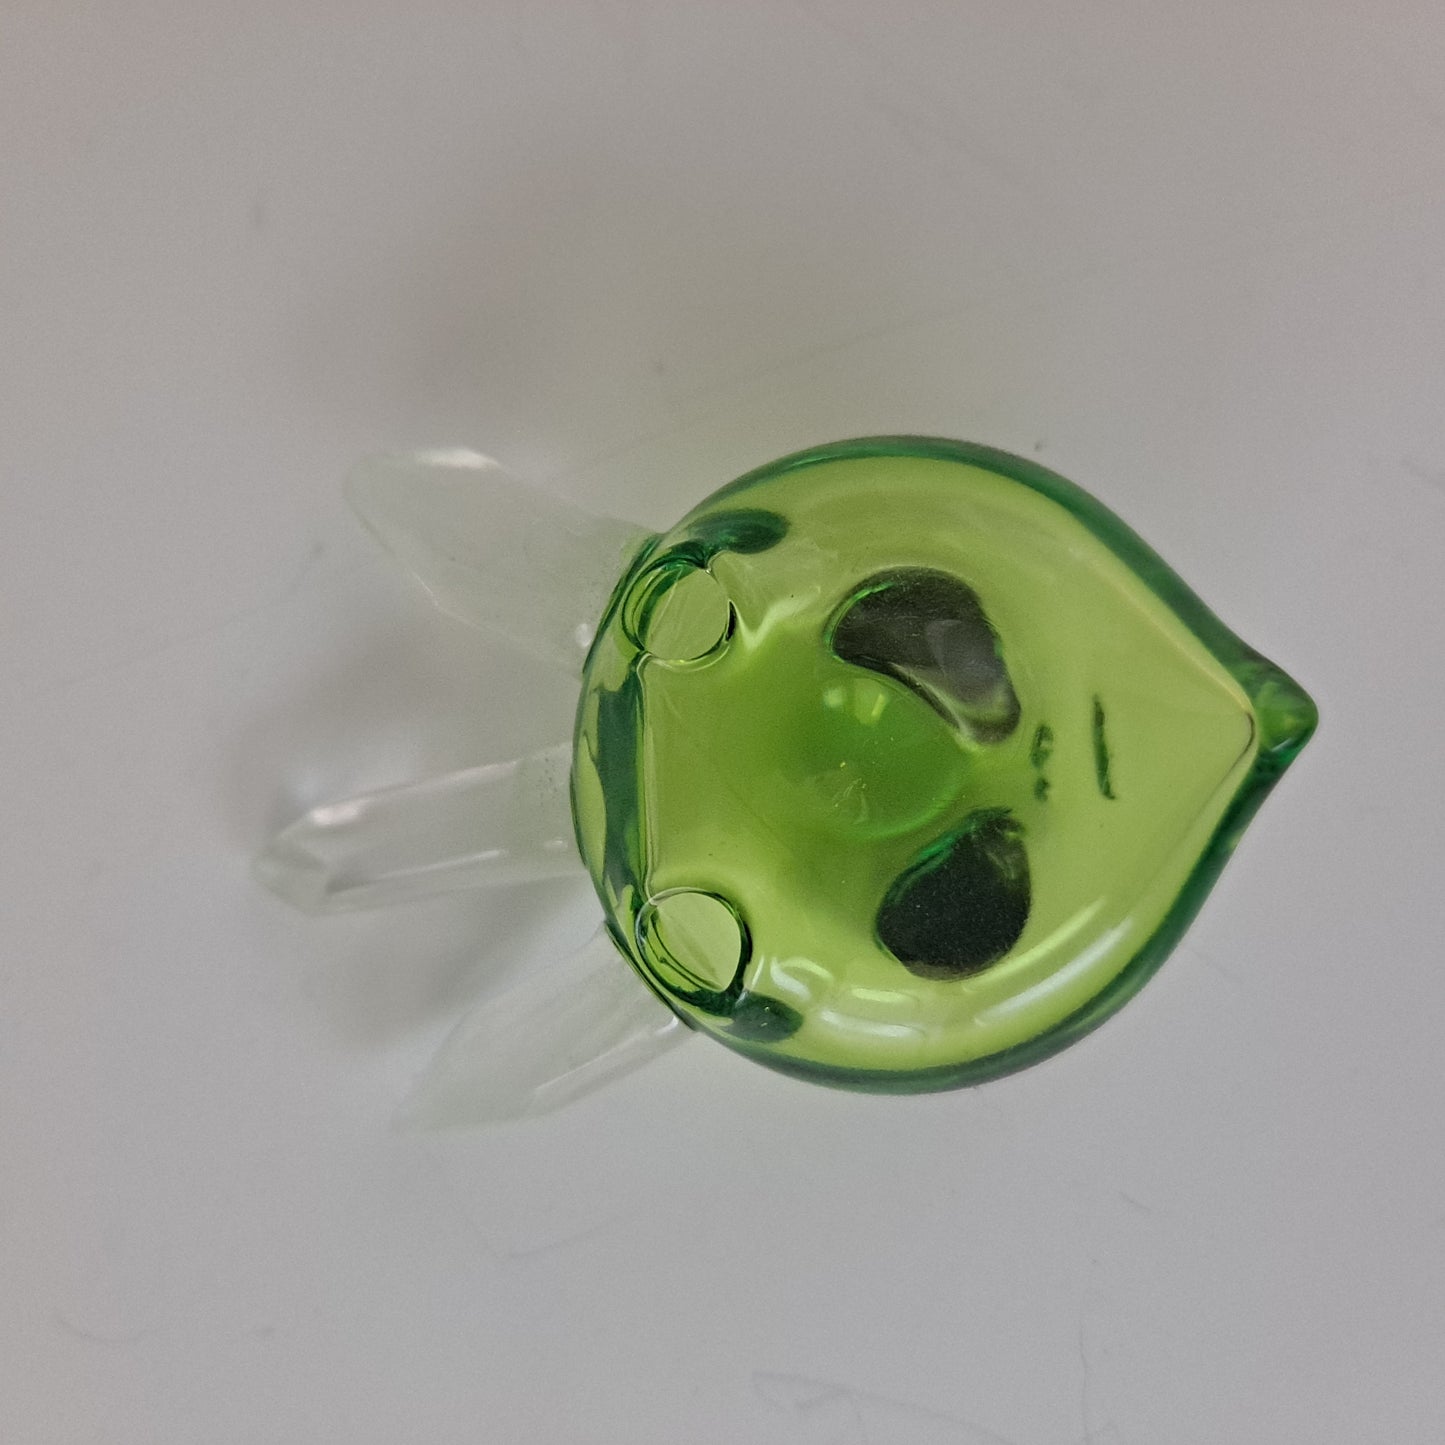 Alien Head Blown Glass Pendant Collection